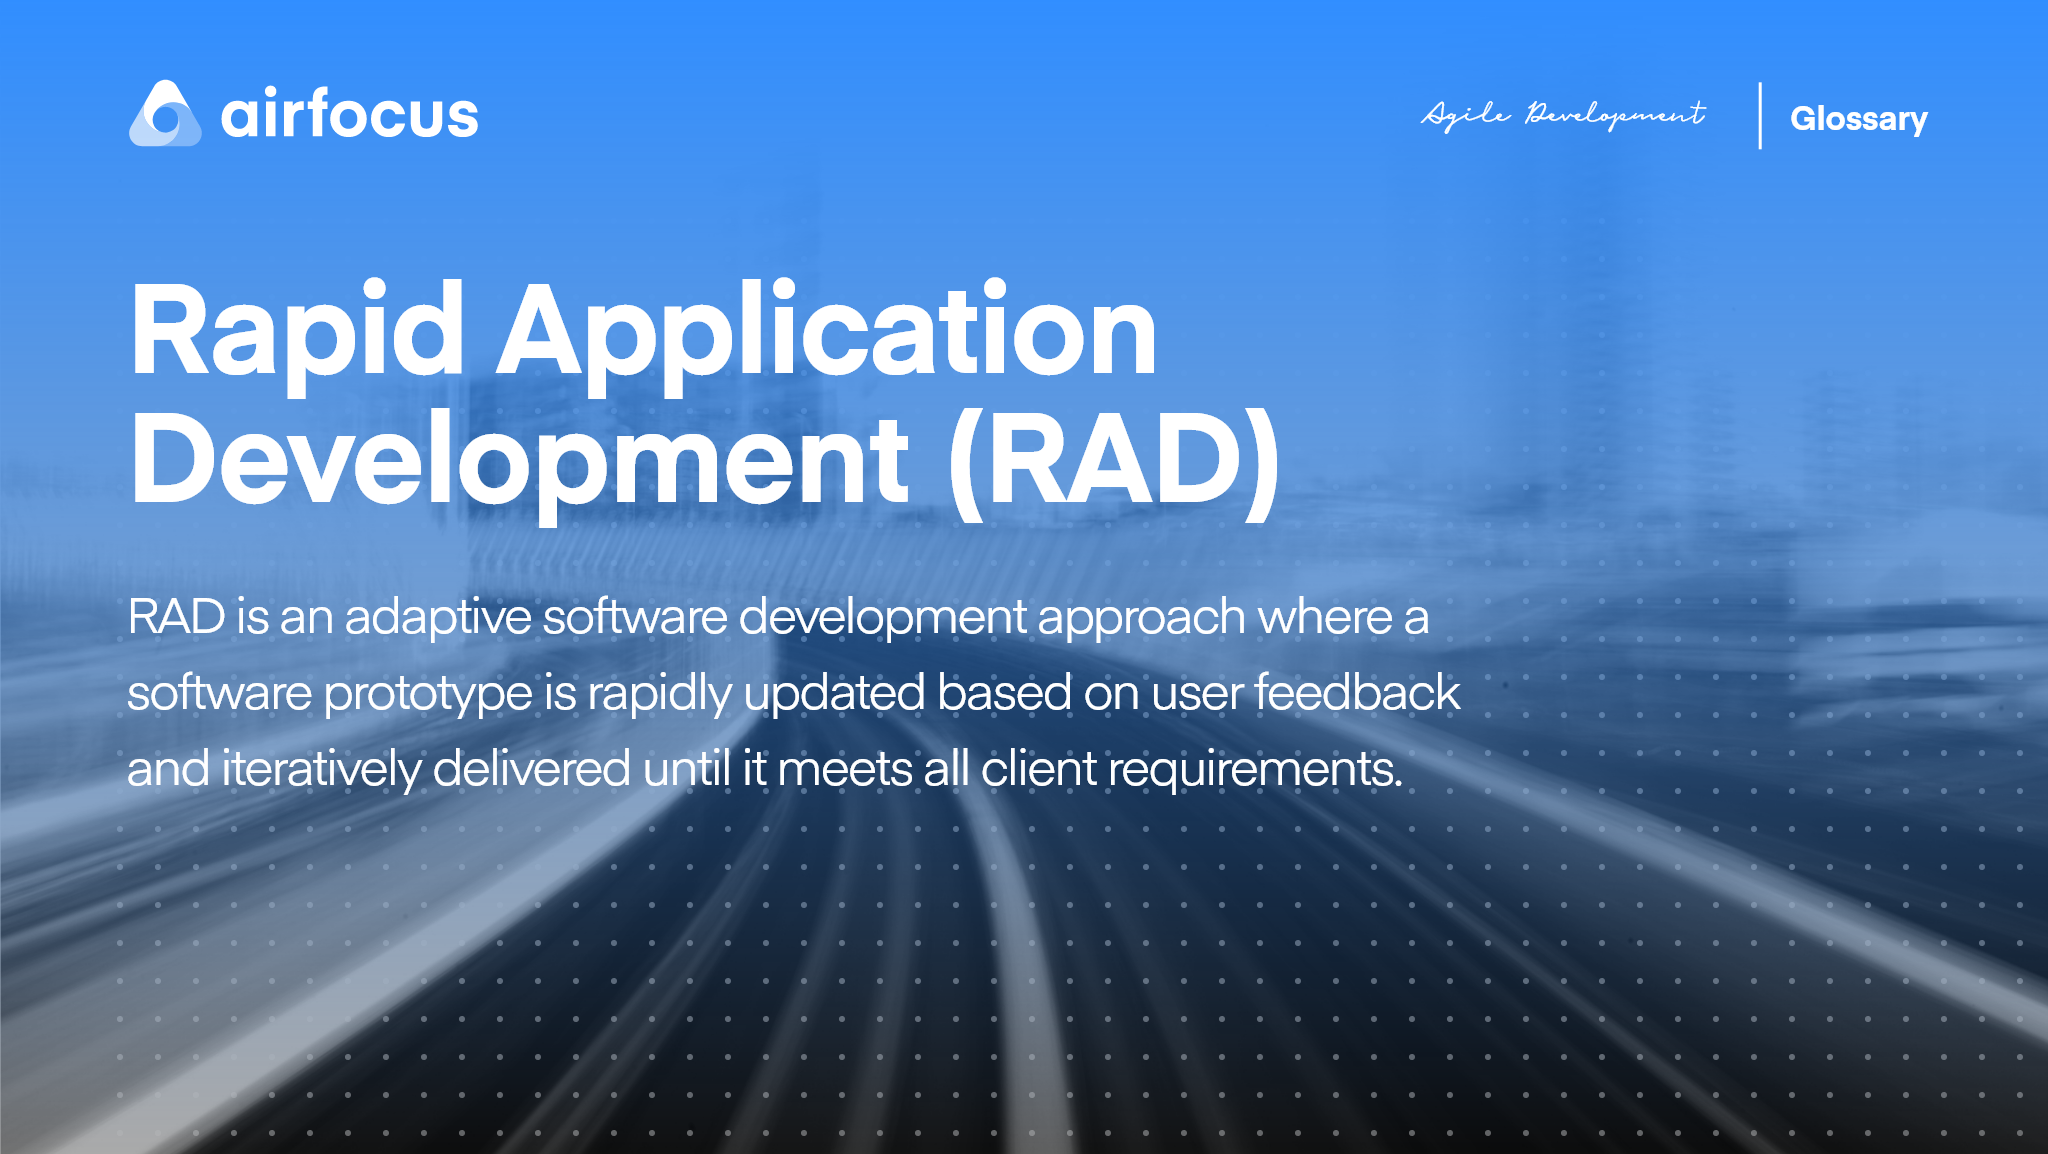 rapid application development definition